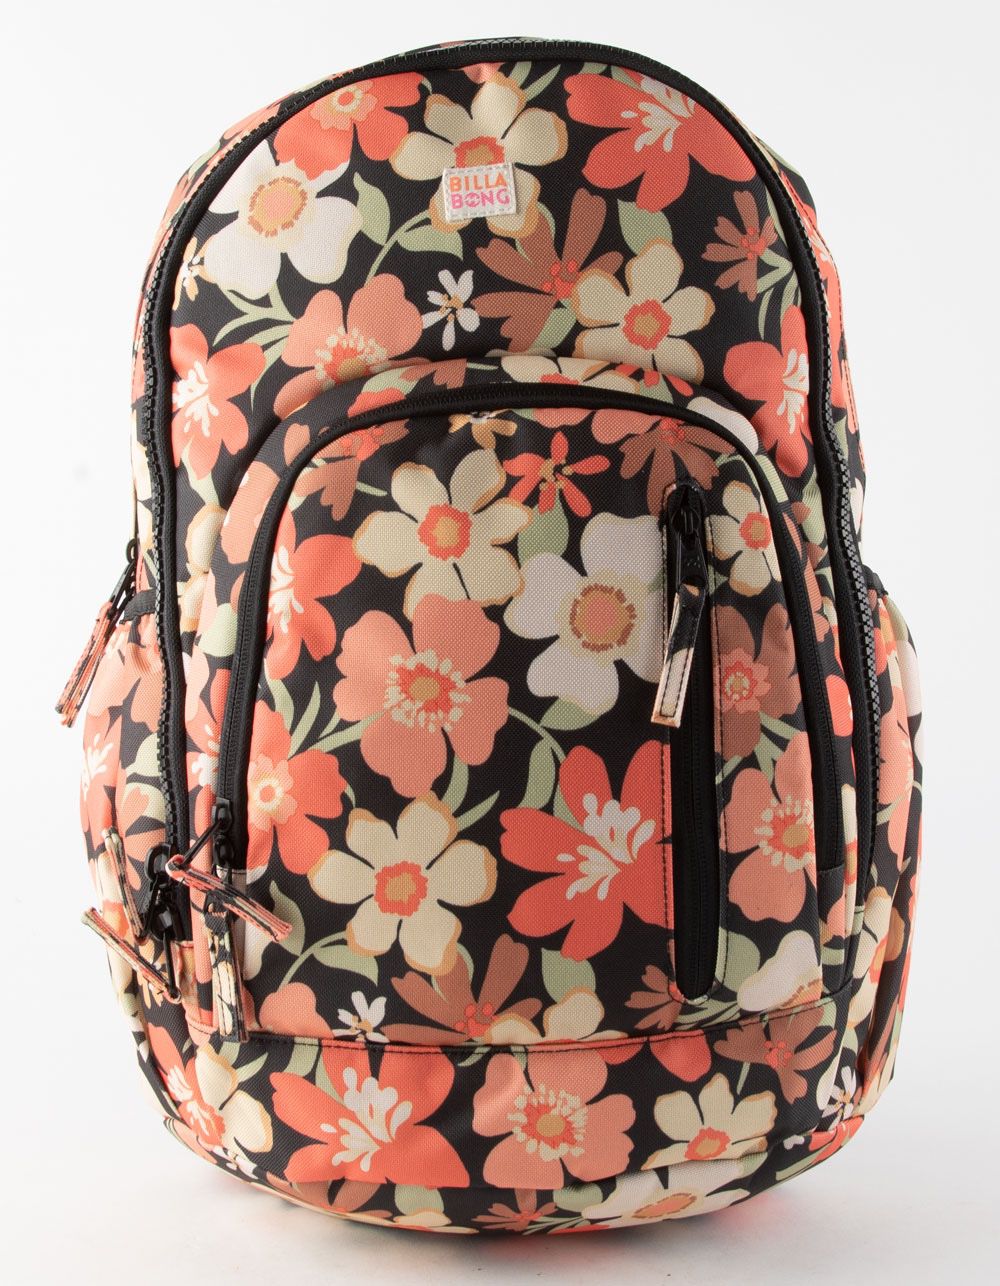 Billabong Roadie Backpack Floral For School Or Travel